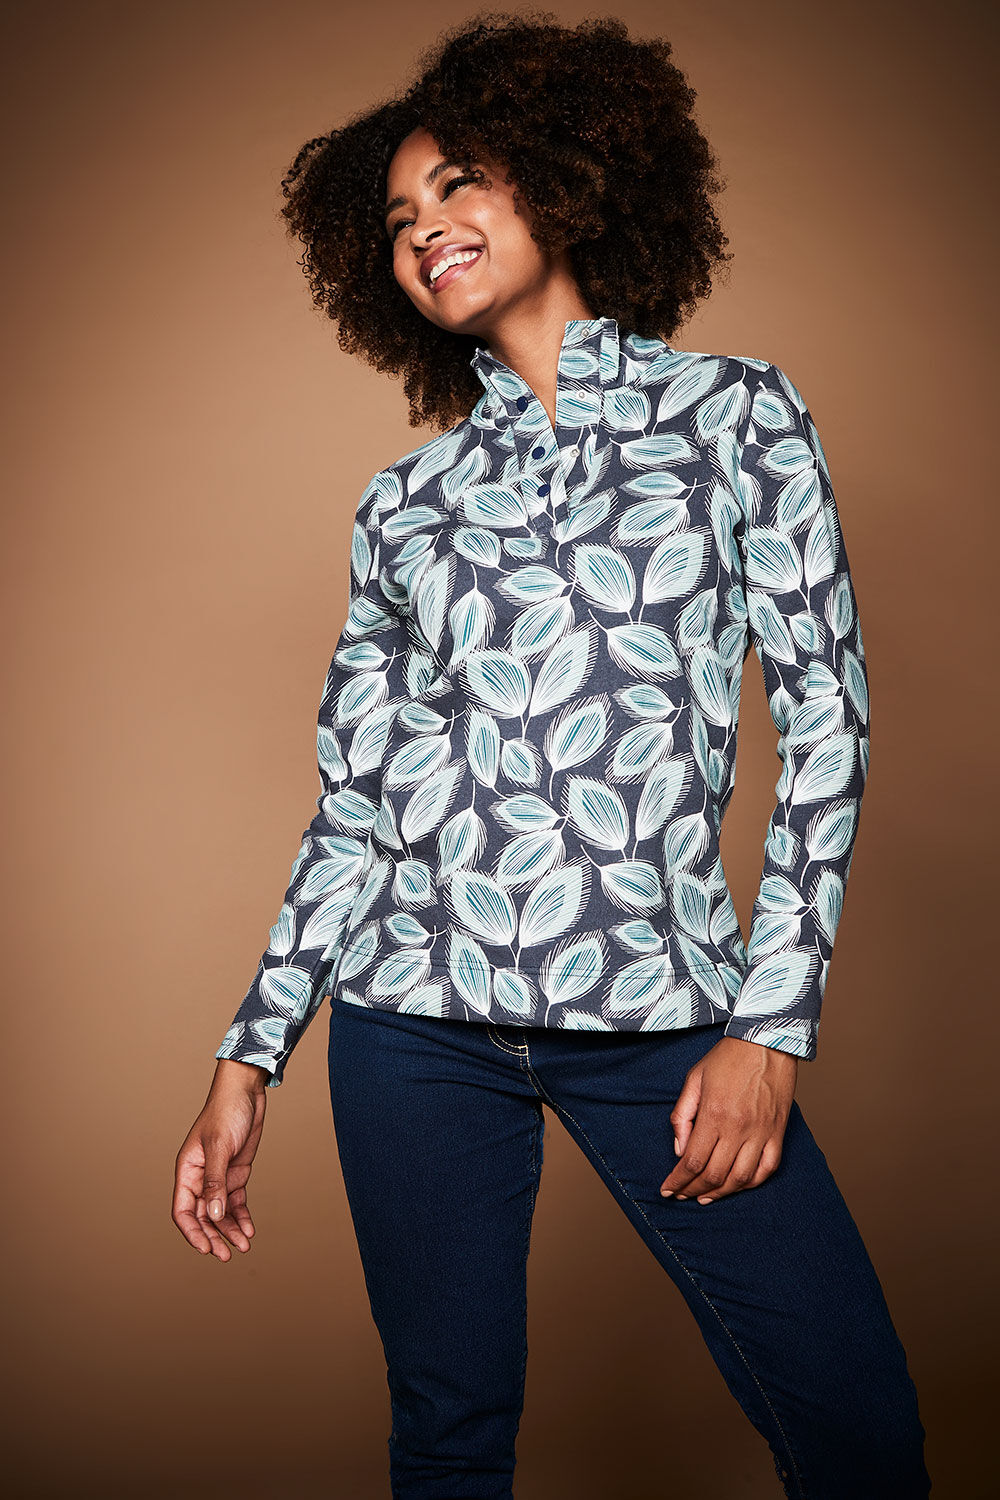 Bonmarche Women’s Navy Blue and White Cotton Leaf Print Long Sleeve Funnel Neck Sweatshirt, Size: 12